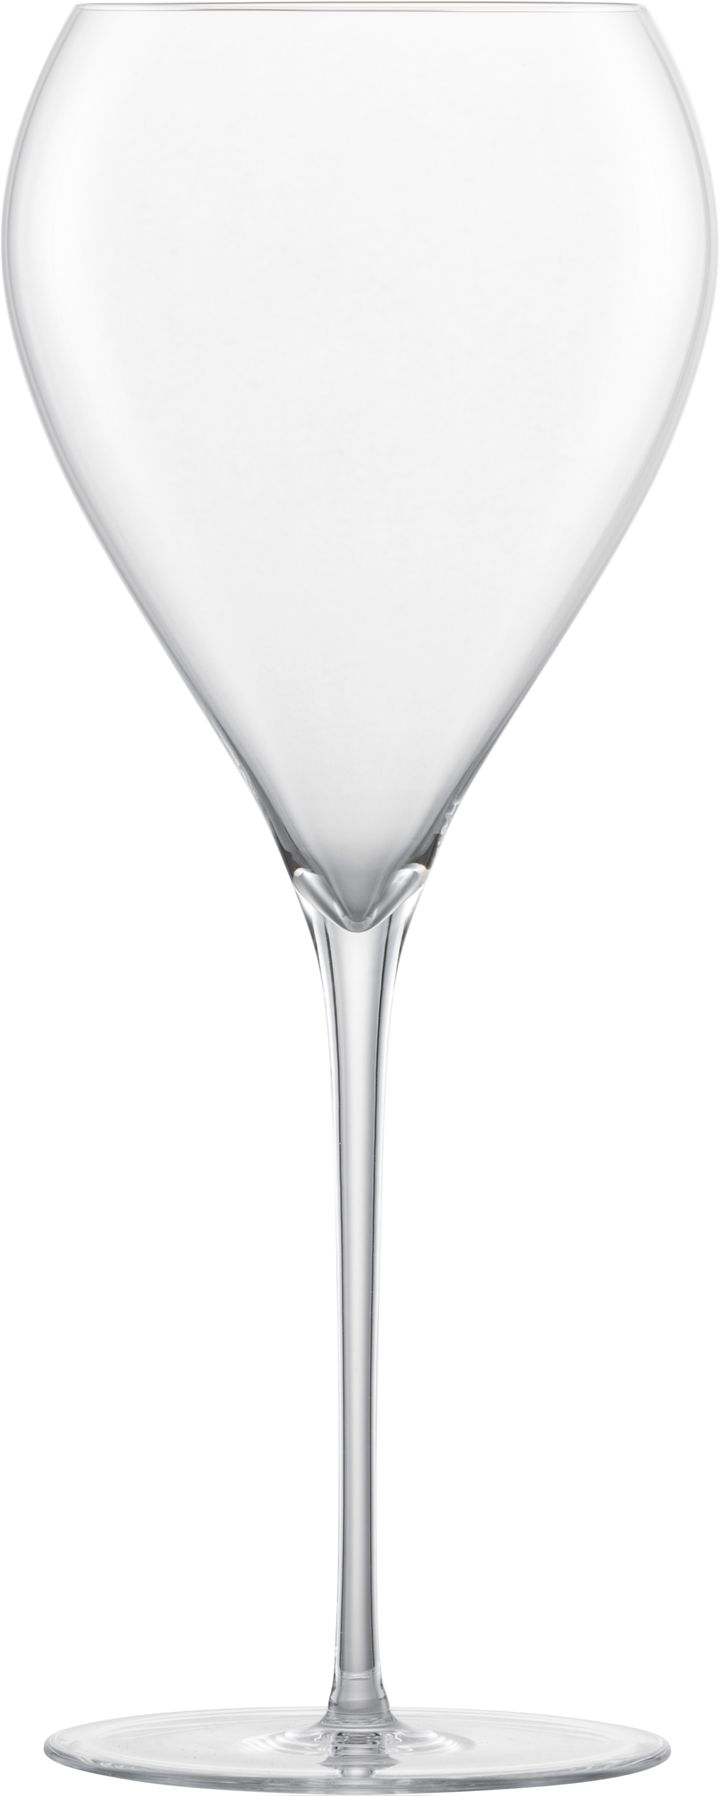 Enoteca Champagnerglas - 67 cl - Zwiesel